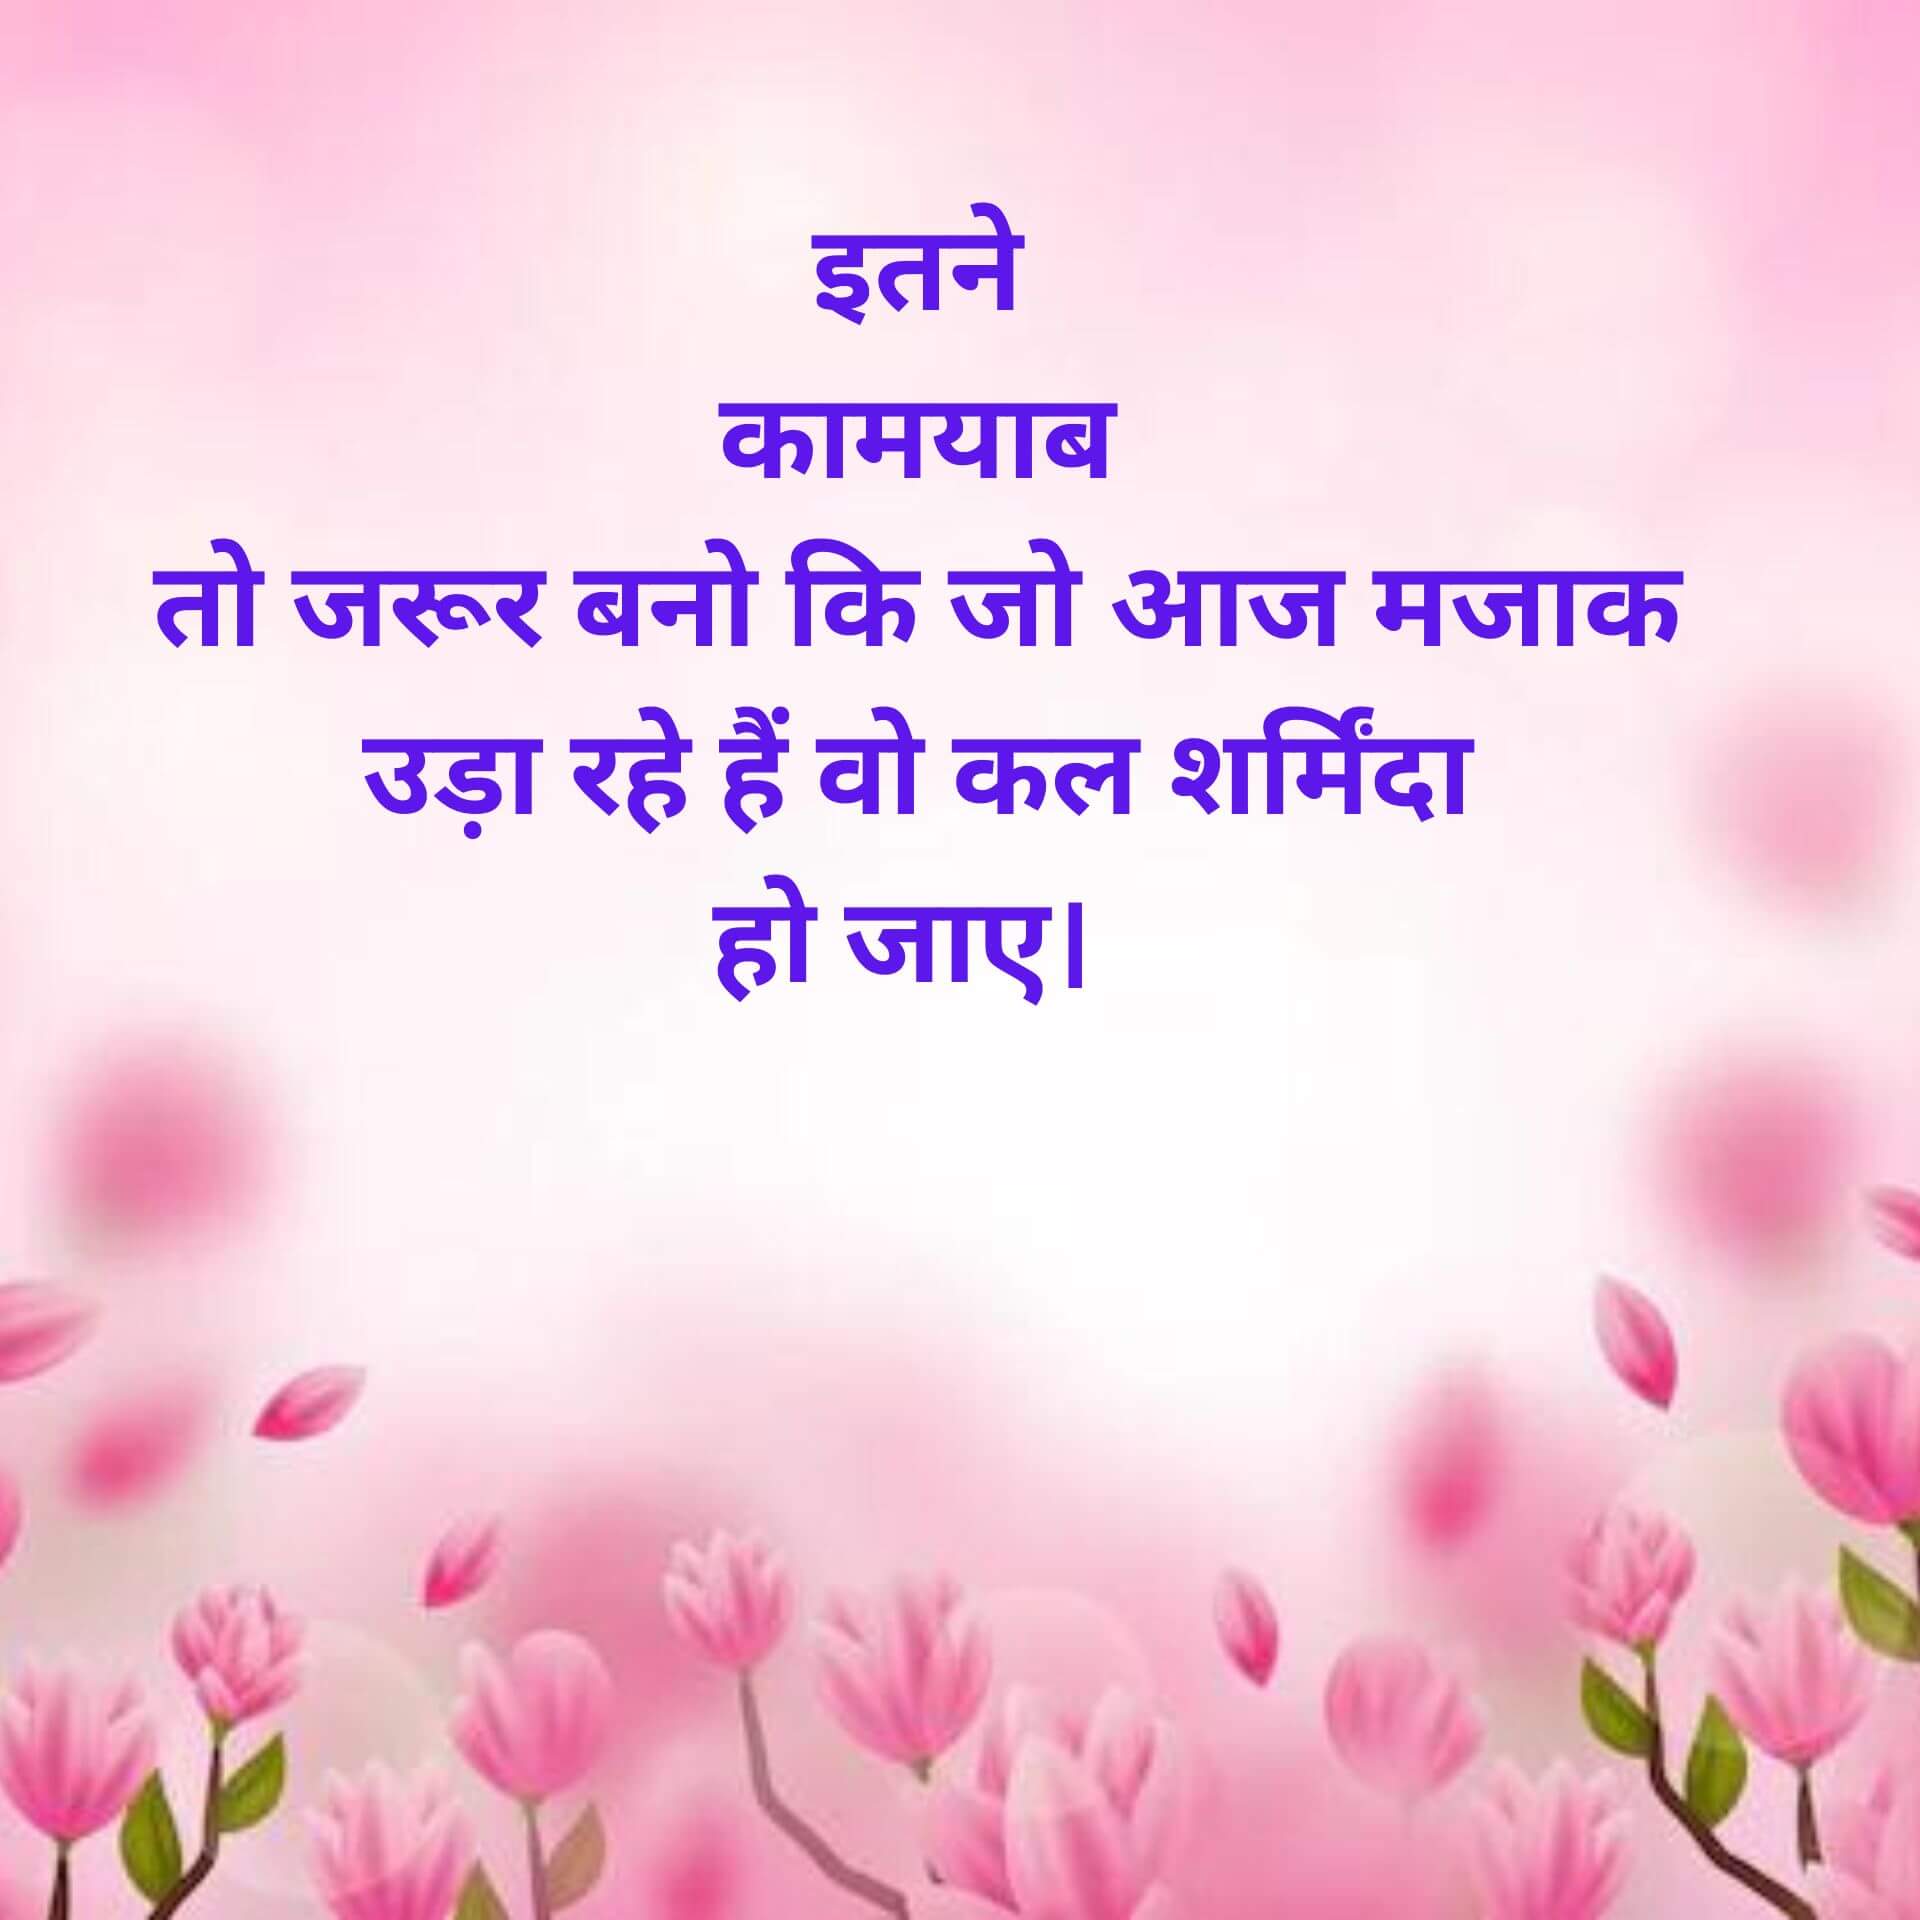 Hindi Motivational Quotes Photo Download